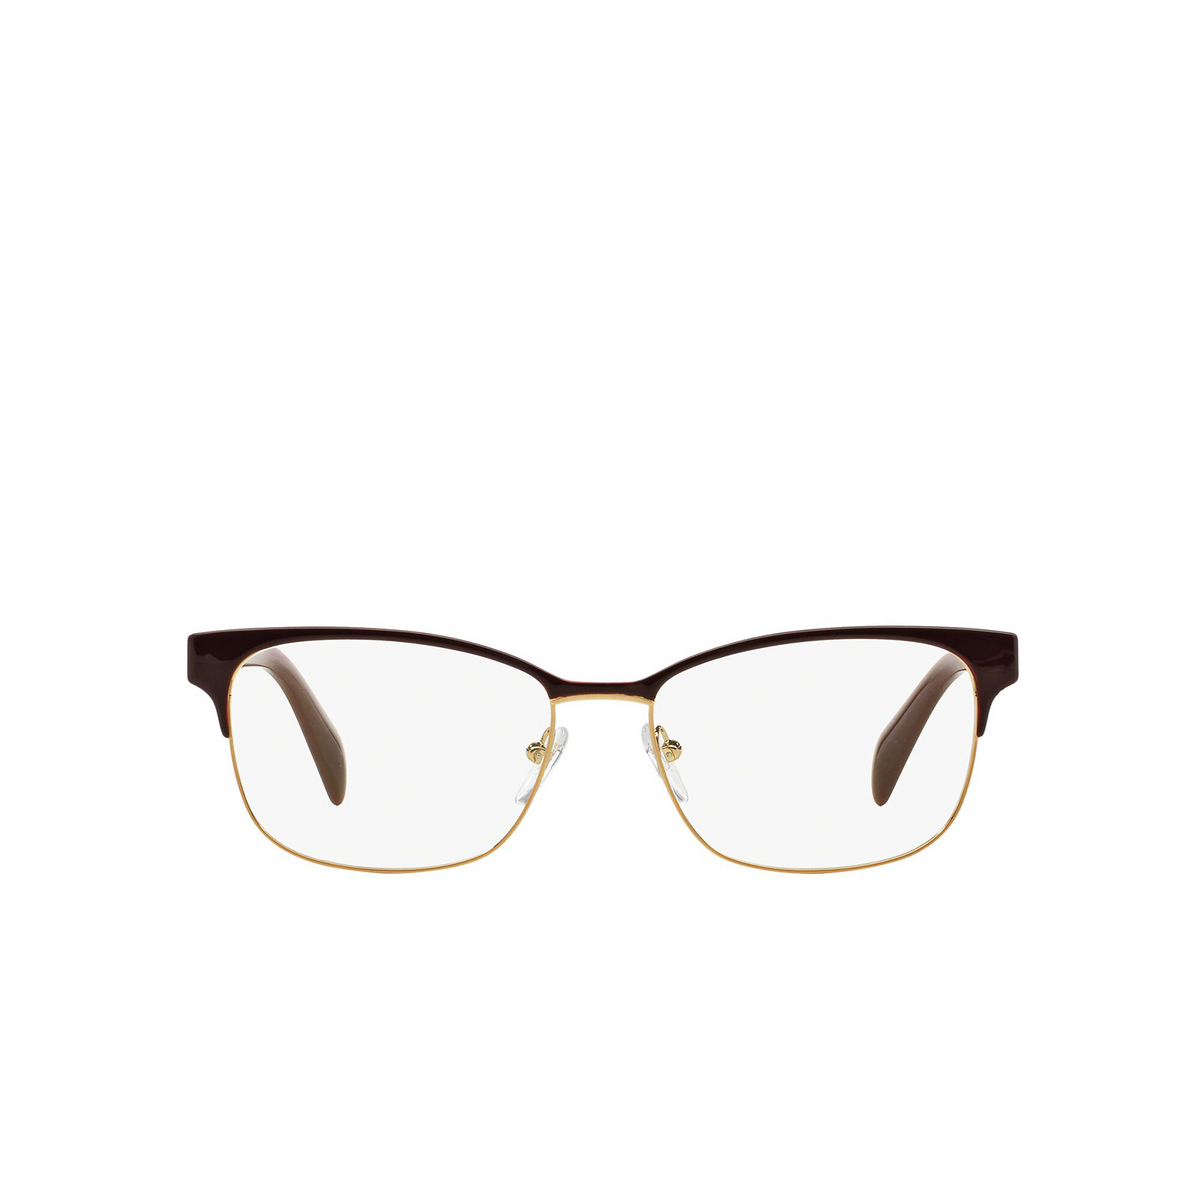 Prada CONCEPTUAL Eyeglasses UAN1O1 Bordeaux on Pale Gold - front view